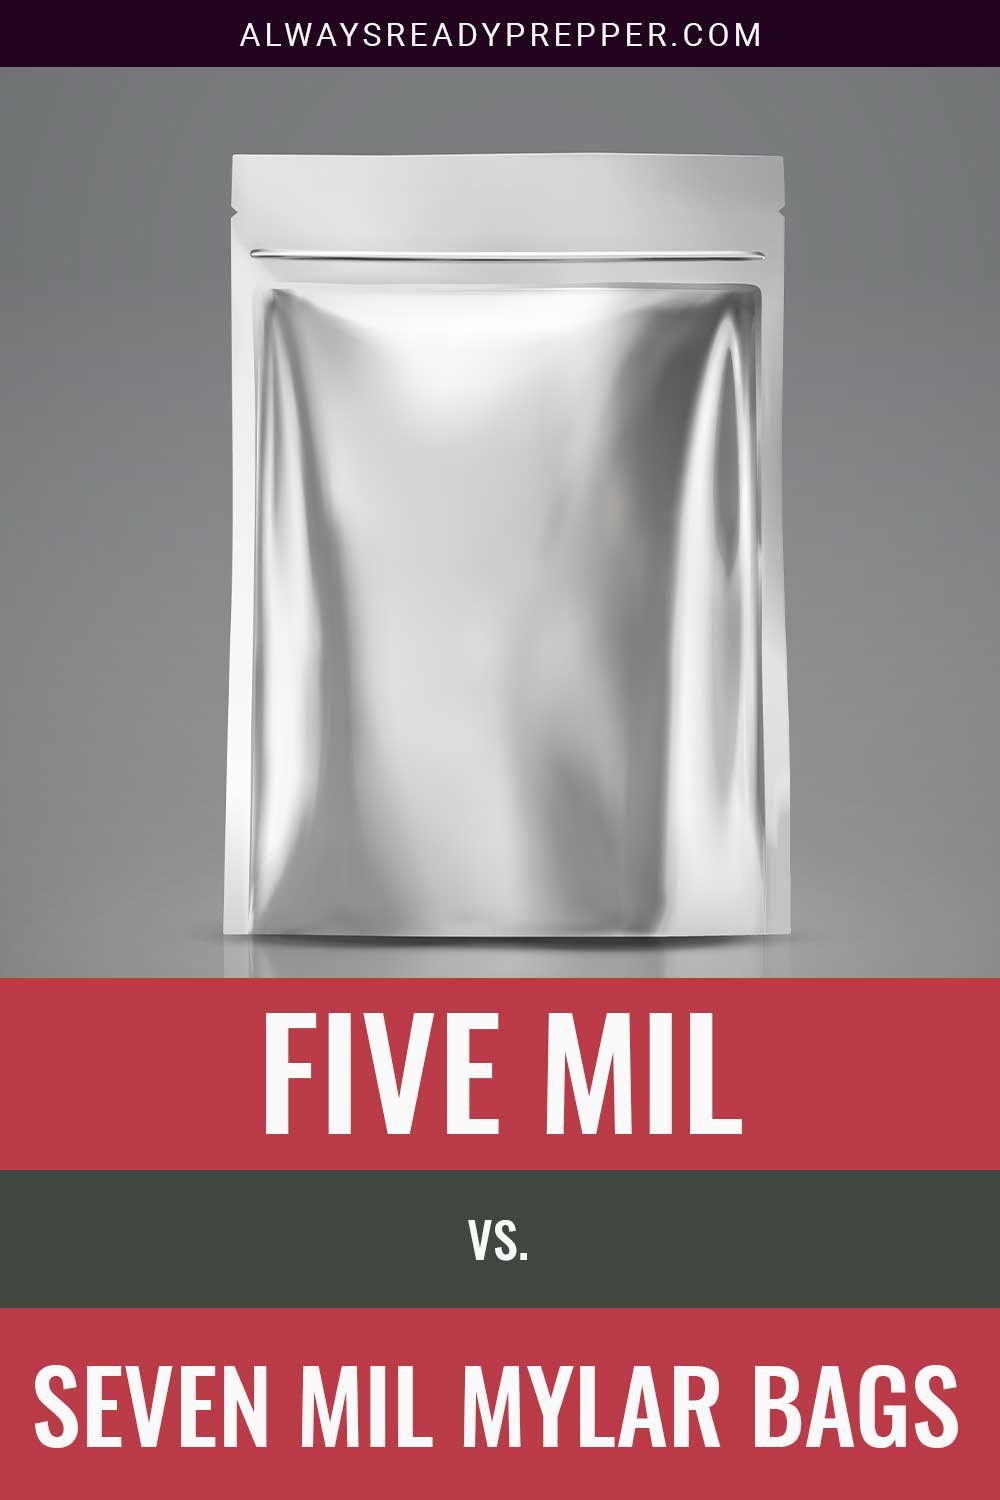 A metallic silver color mylar bag - Five Mil vs. Seven Mil Mylar bags.